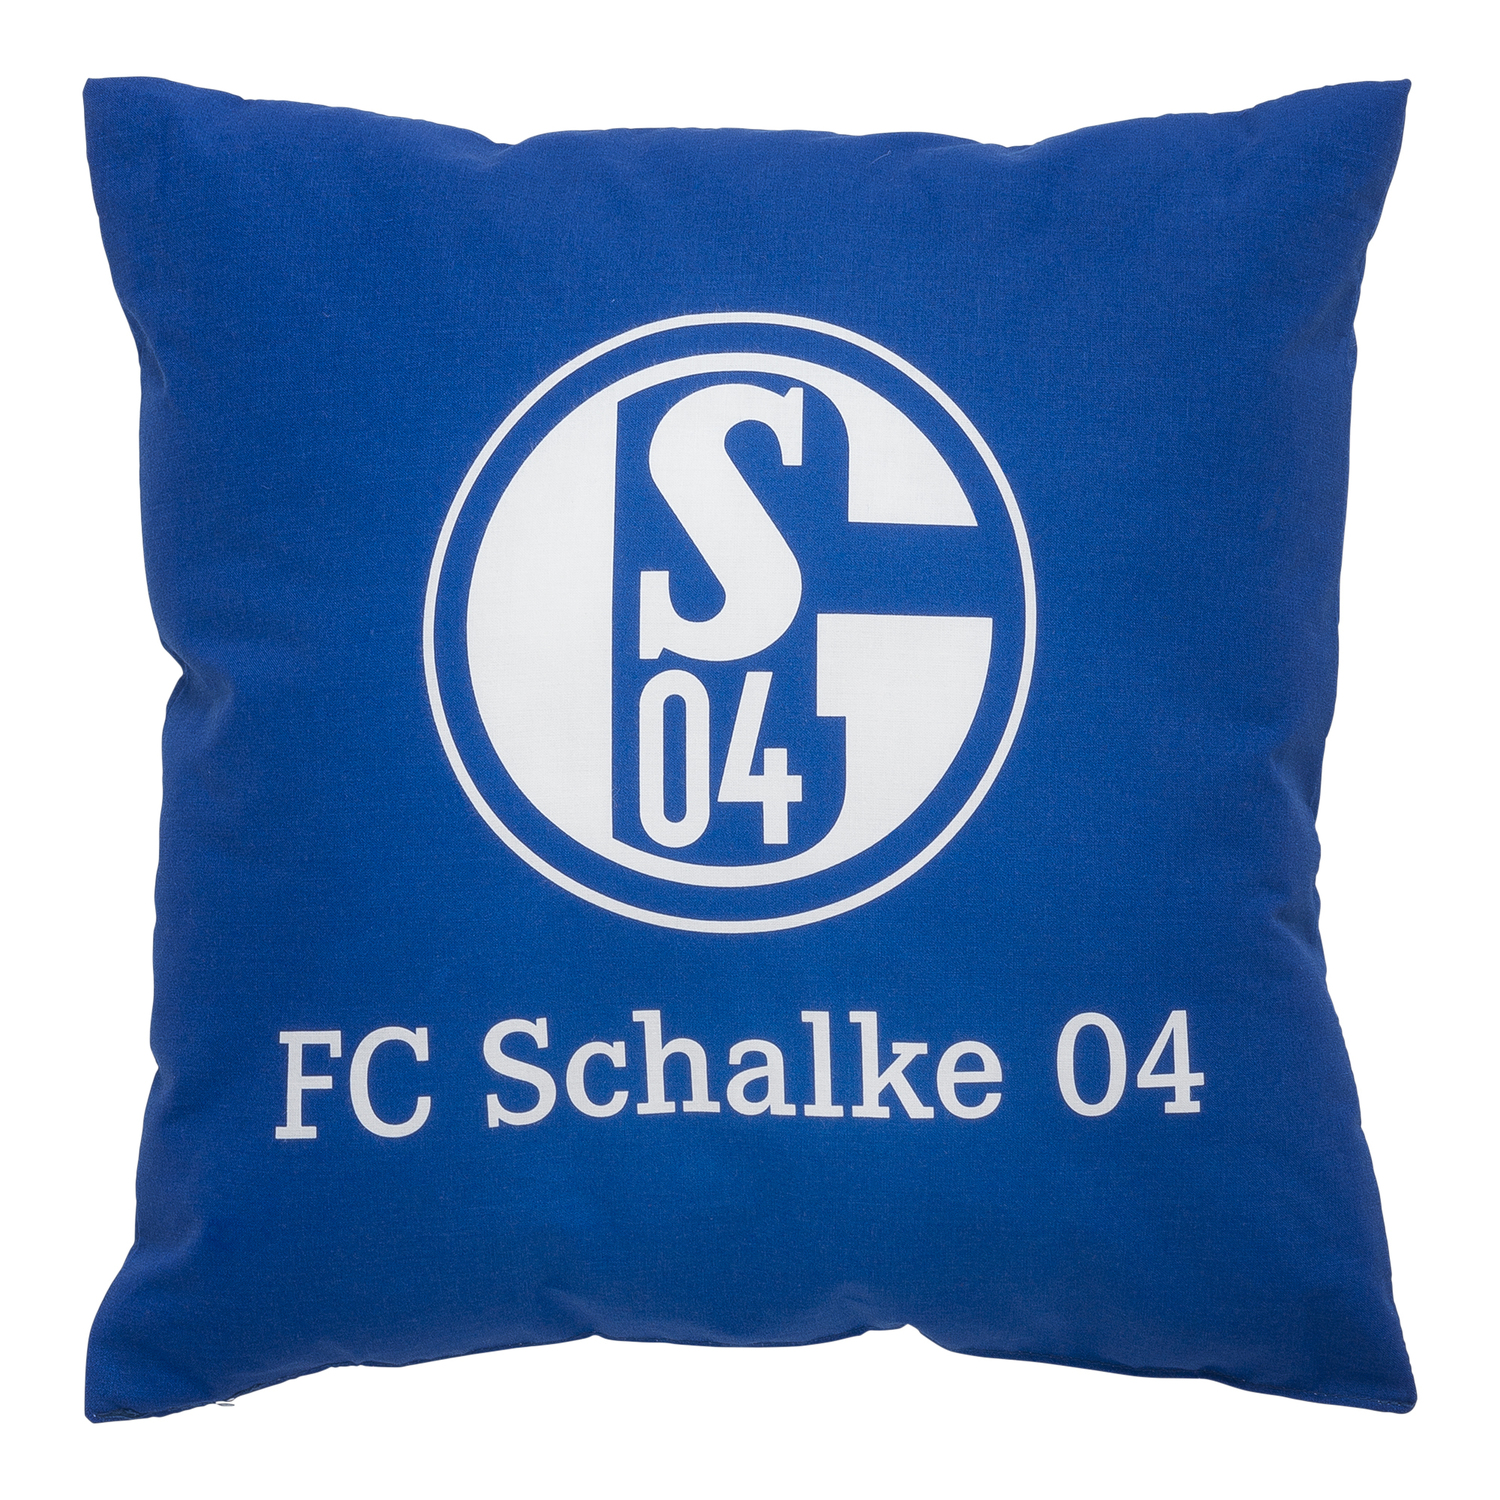 Hissfahne ca.200 x 300 cm   FC Schalke 04 Fussball Fanartikel 